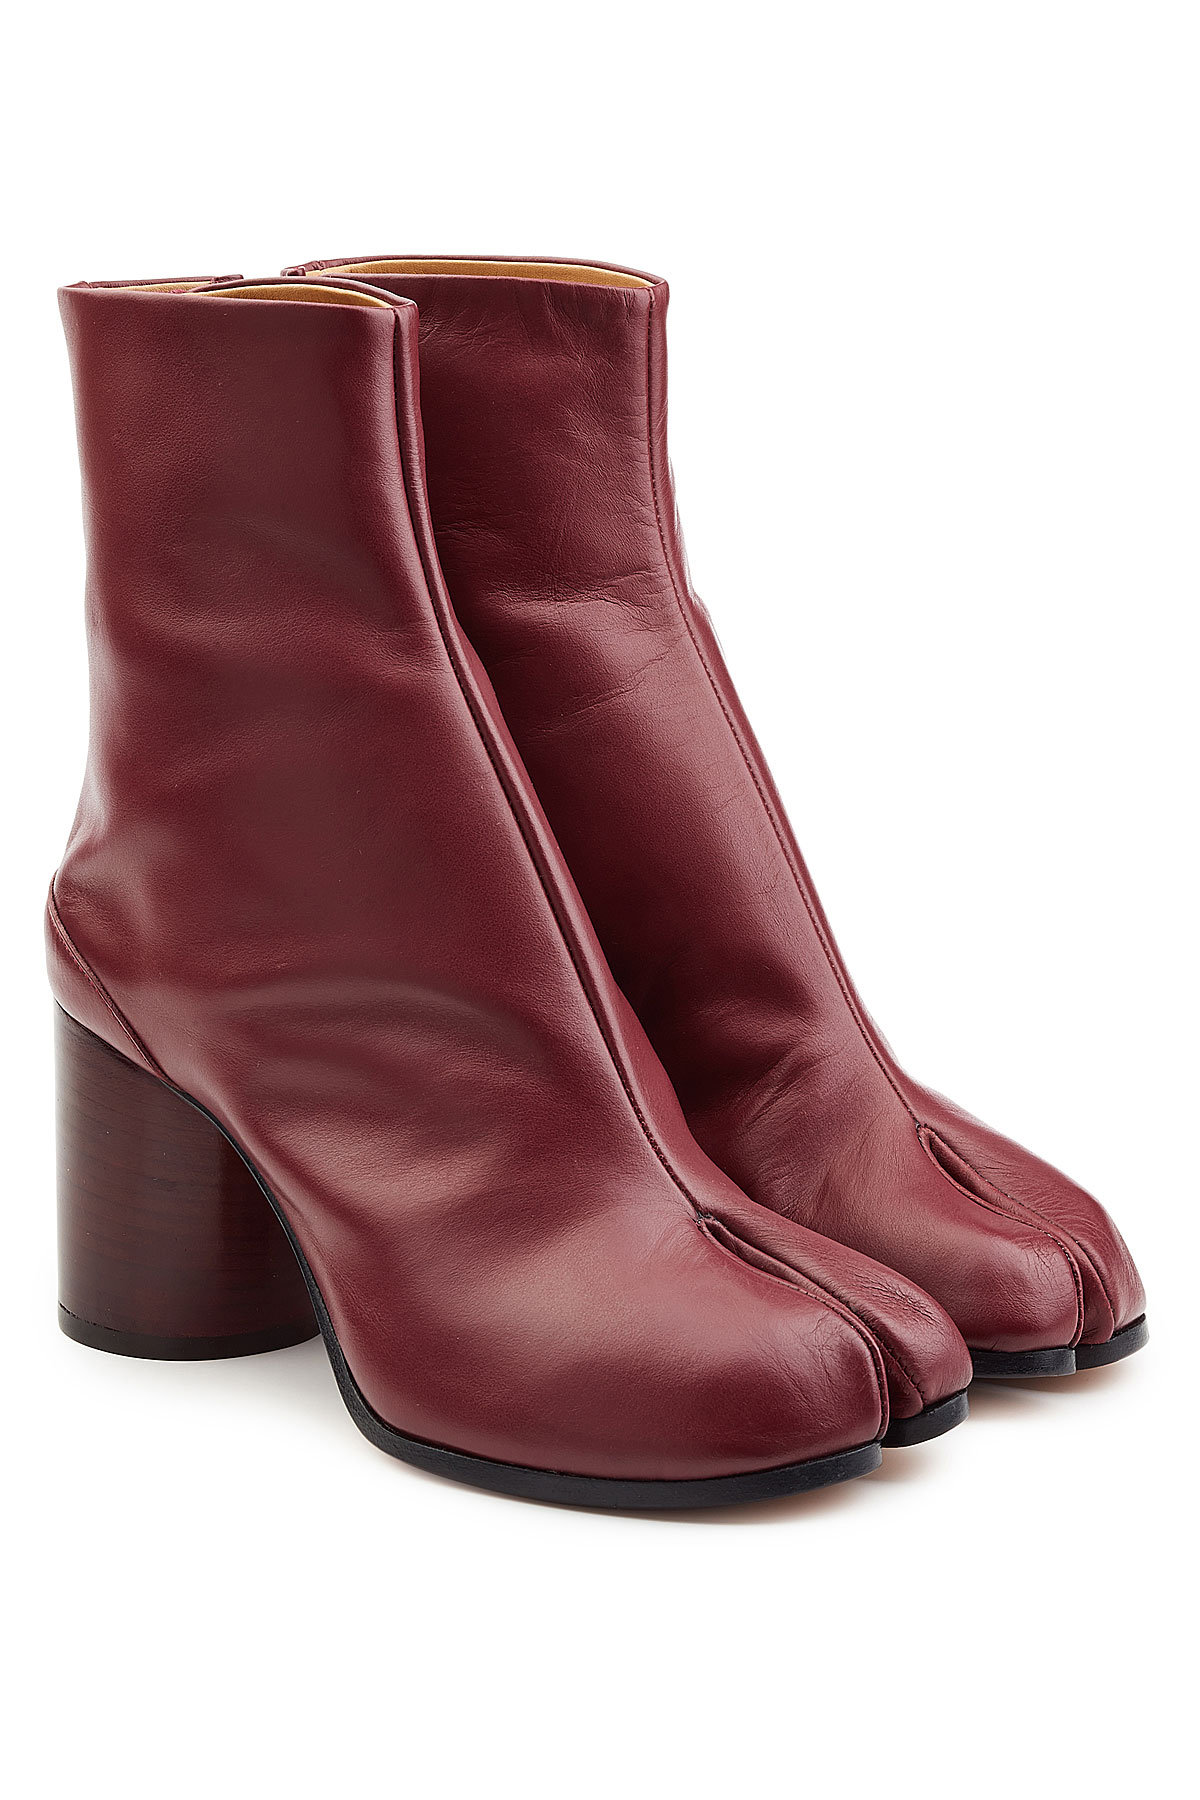 Maison Margiela - Leather Split Toe Ankle Boots